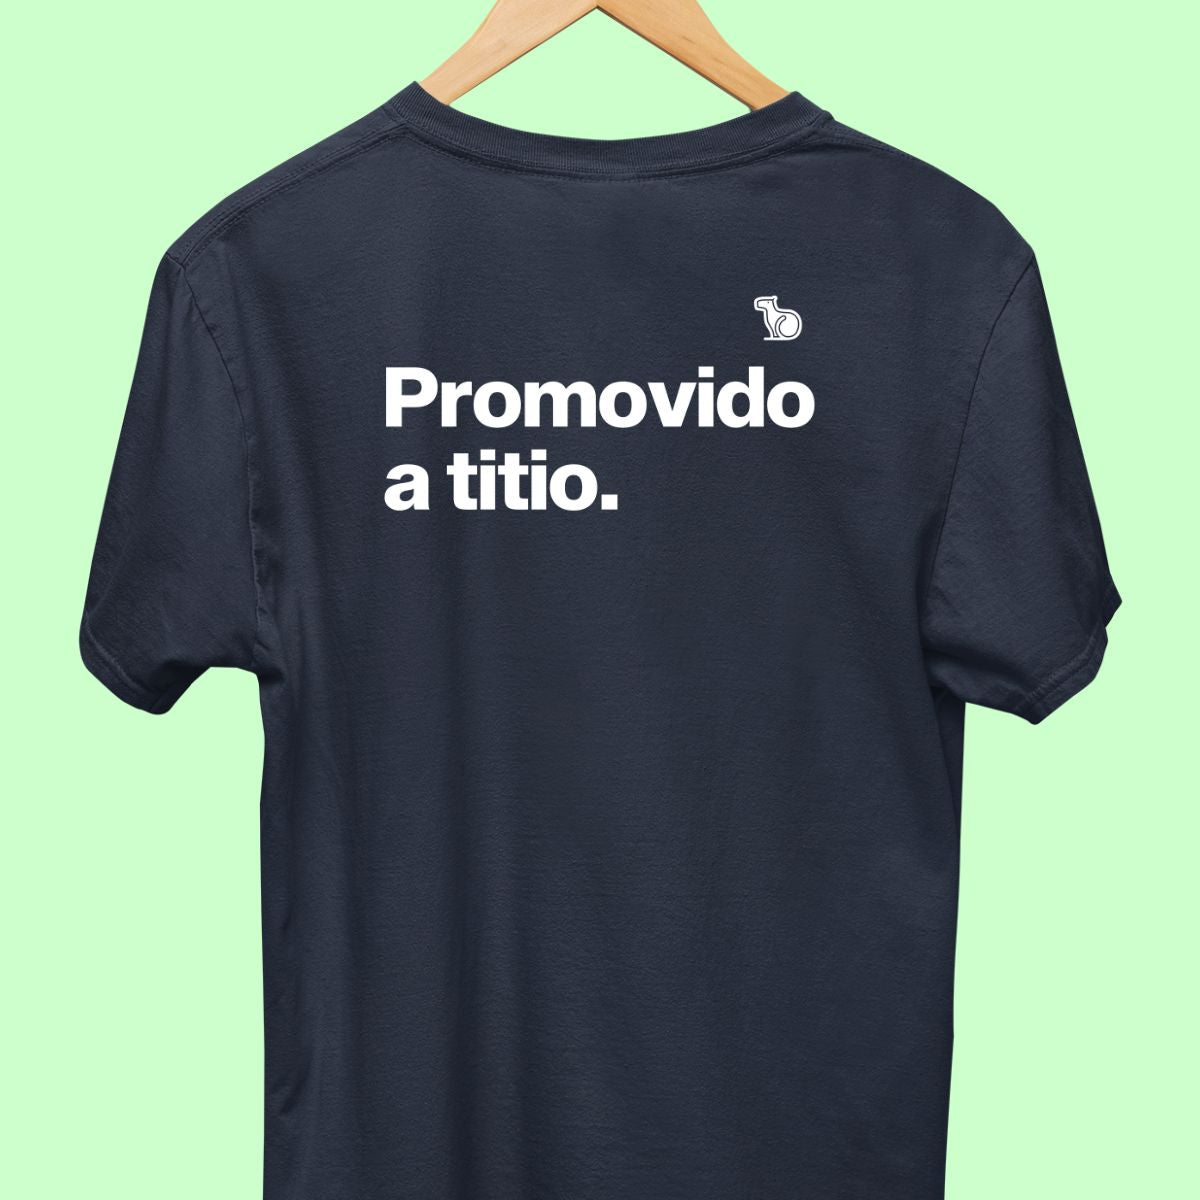 Camiseta com a frase "promovido a titio" masculina azul.